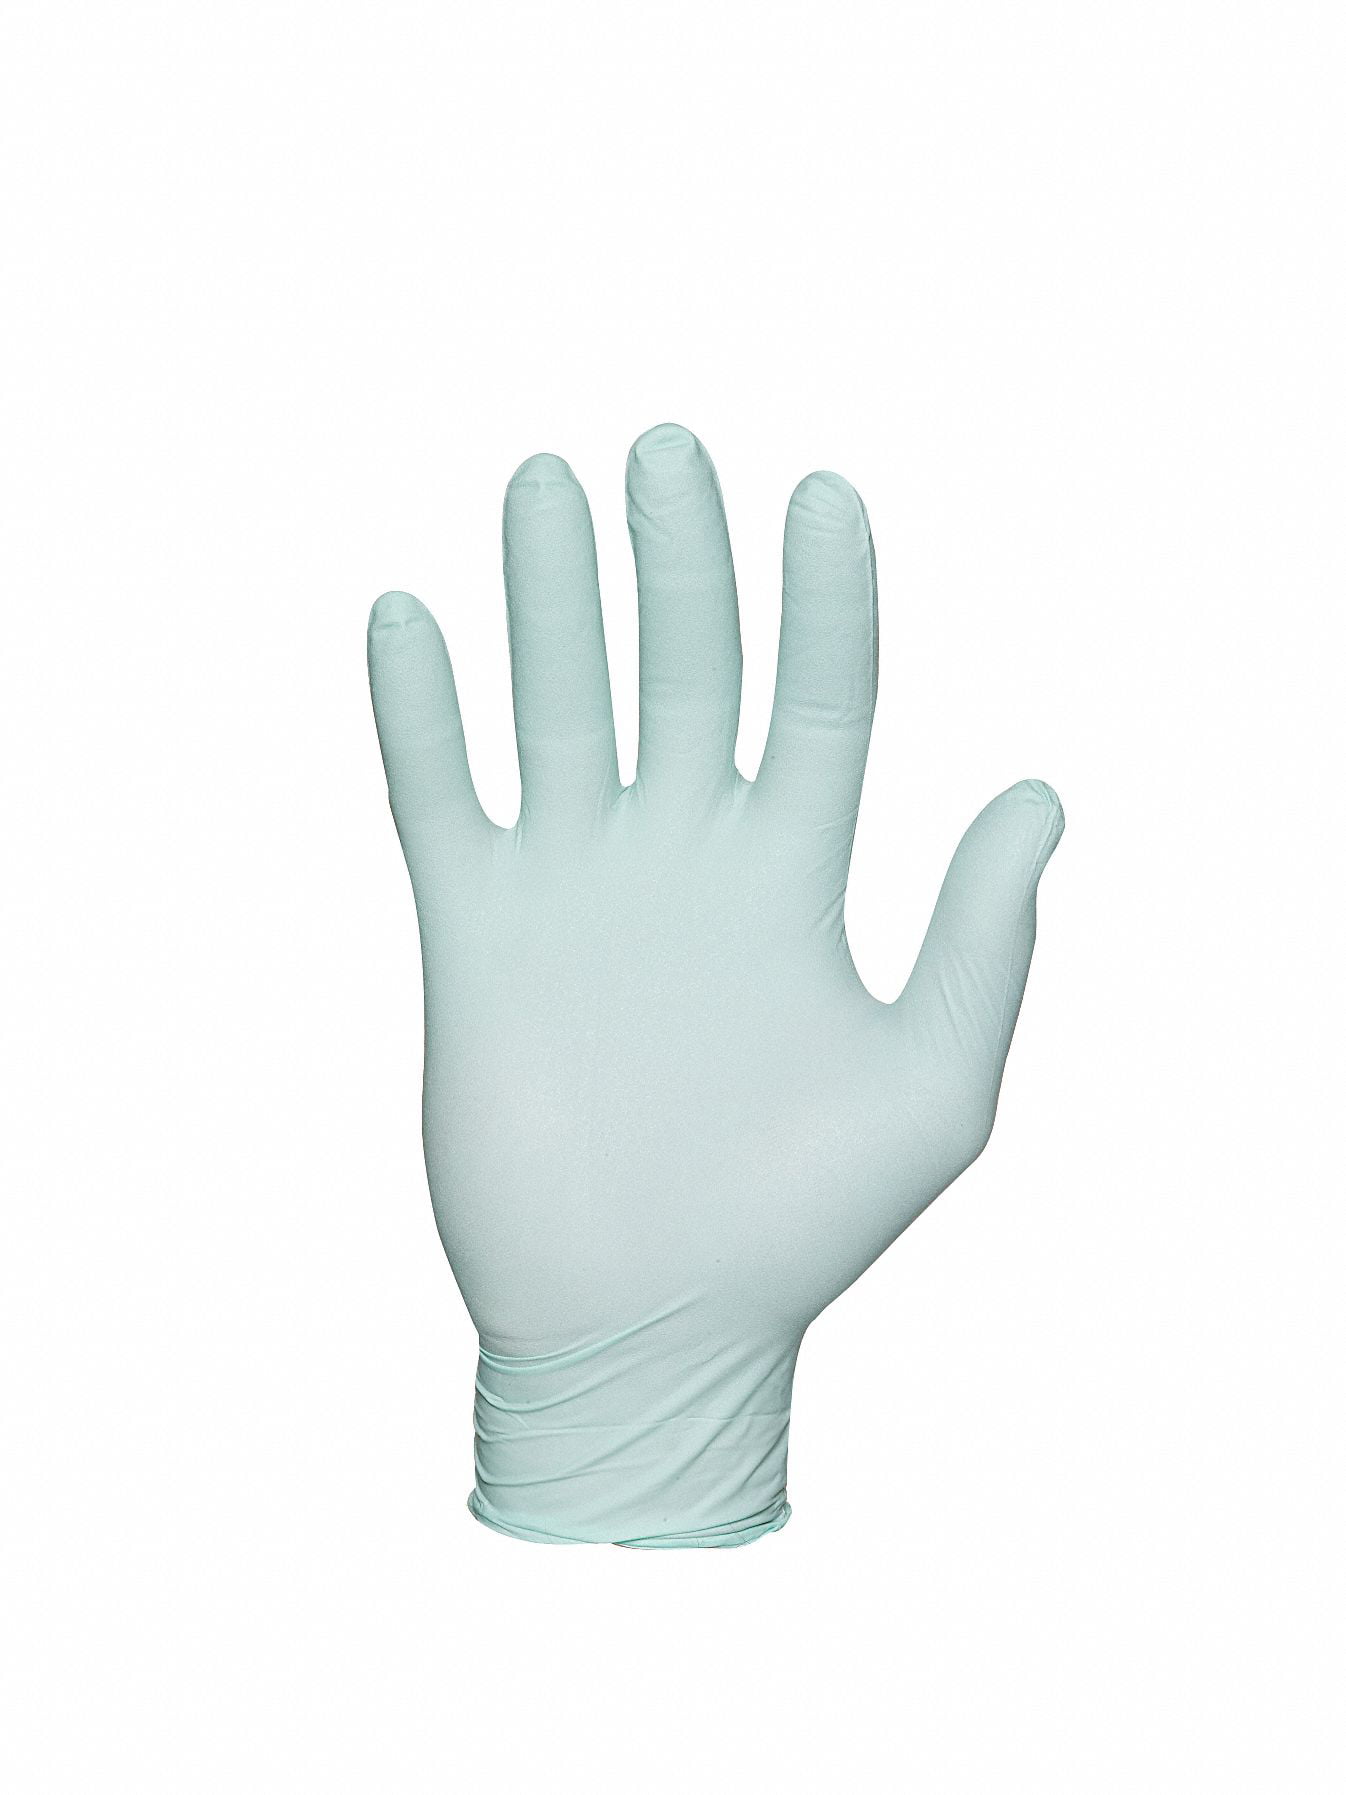 Nitrile Disposable Gloves PK100 L Blue